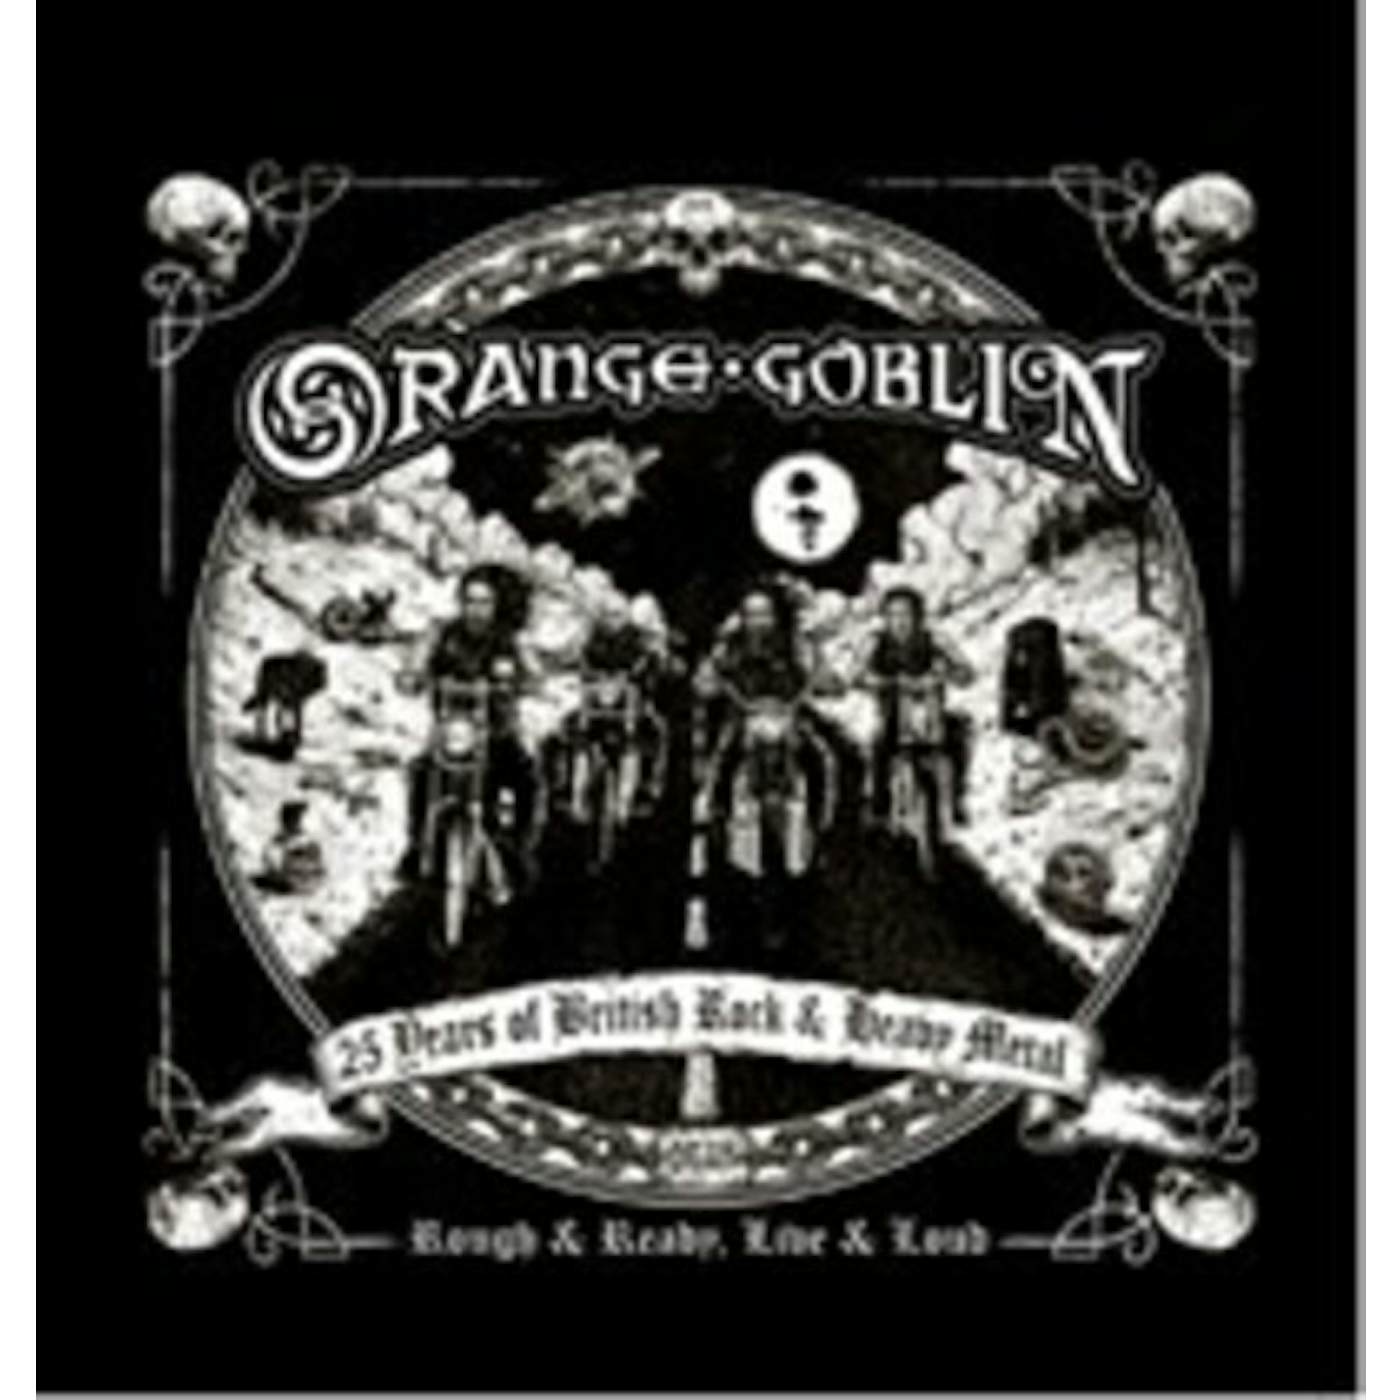 Orange Goblin ROUGH & READY LIVE & LOUD Vinyl Record